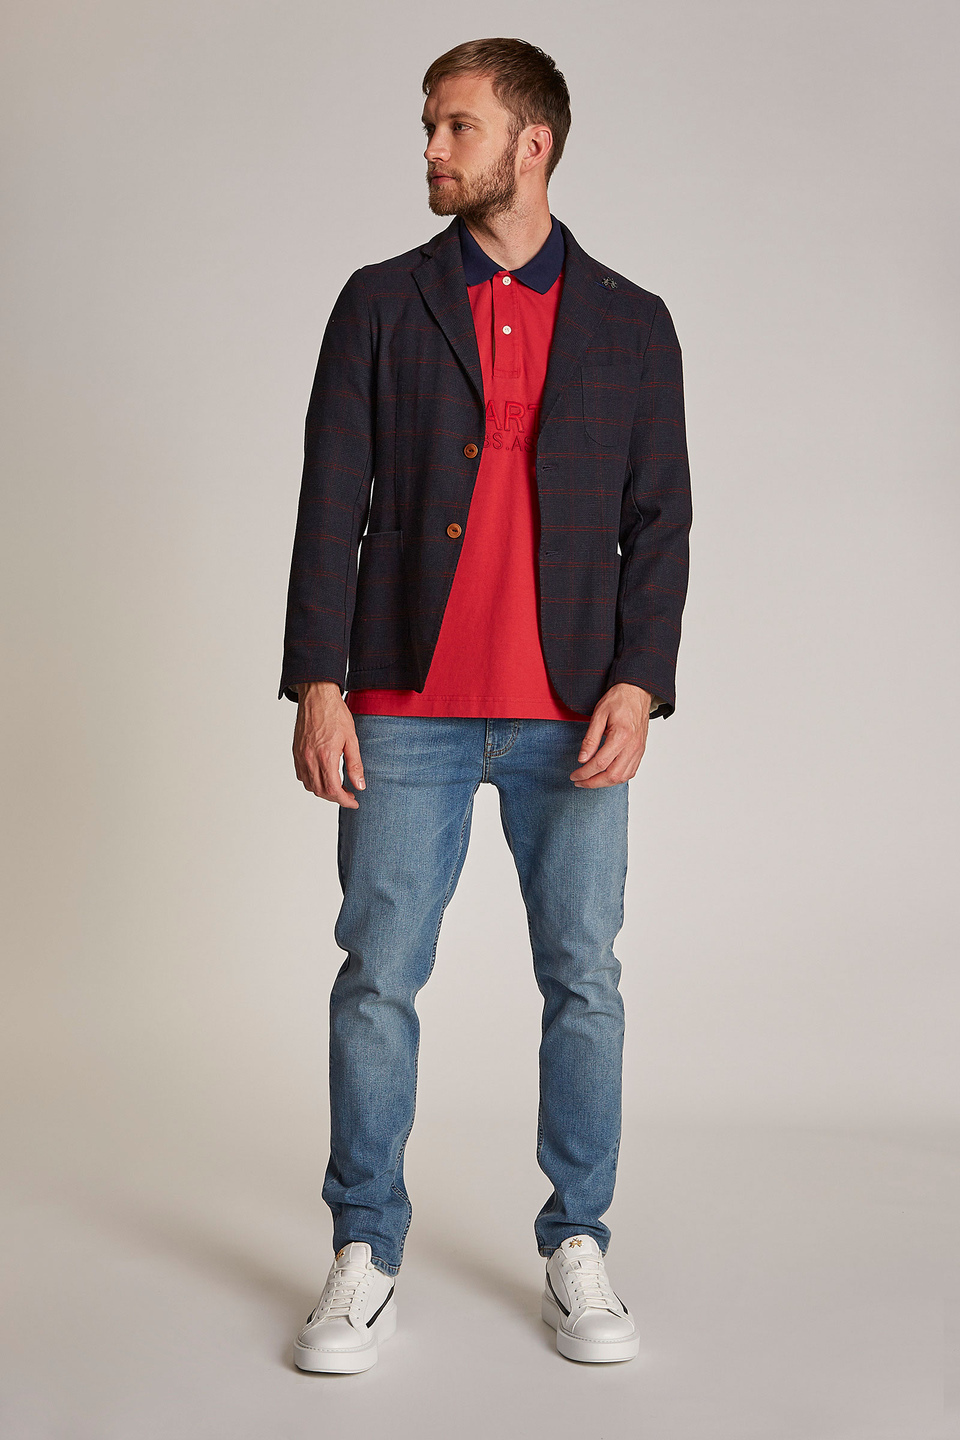 Men's oversized plain-coloured short-sleeved polo shirt | La Martina - Official Online Shop